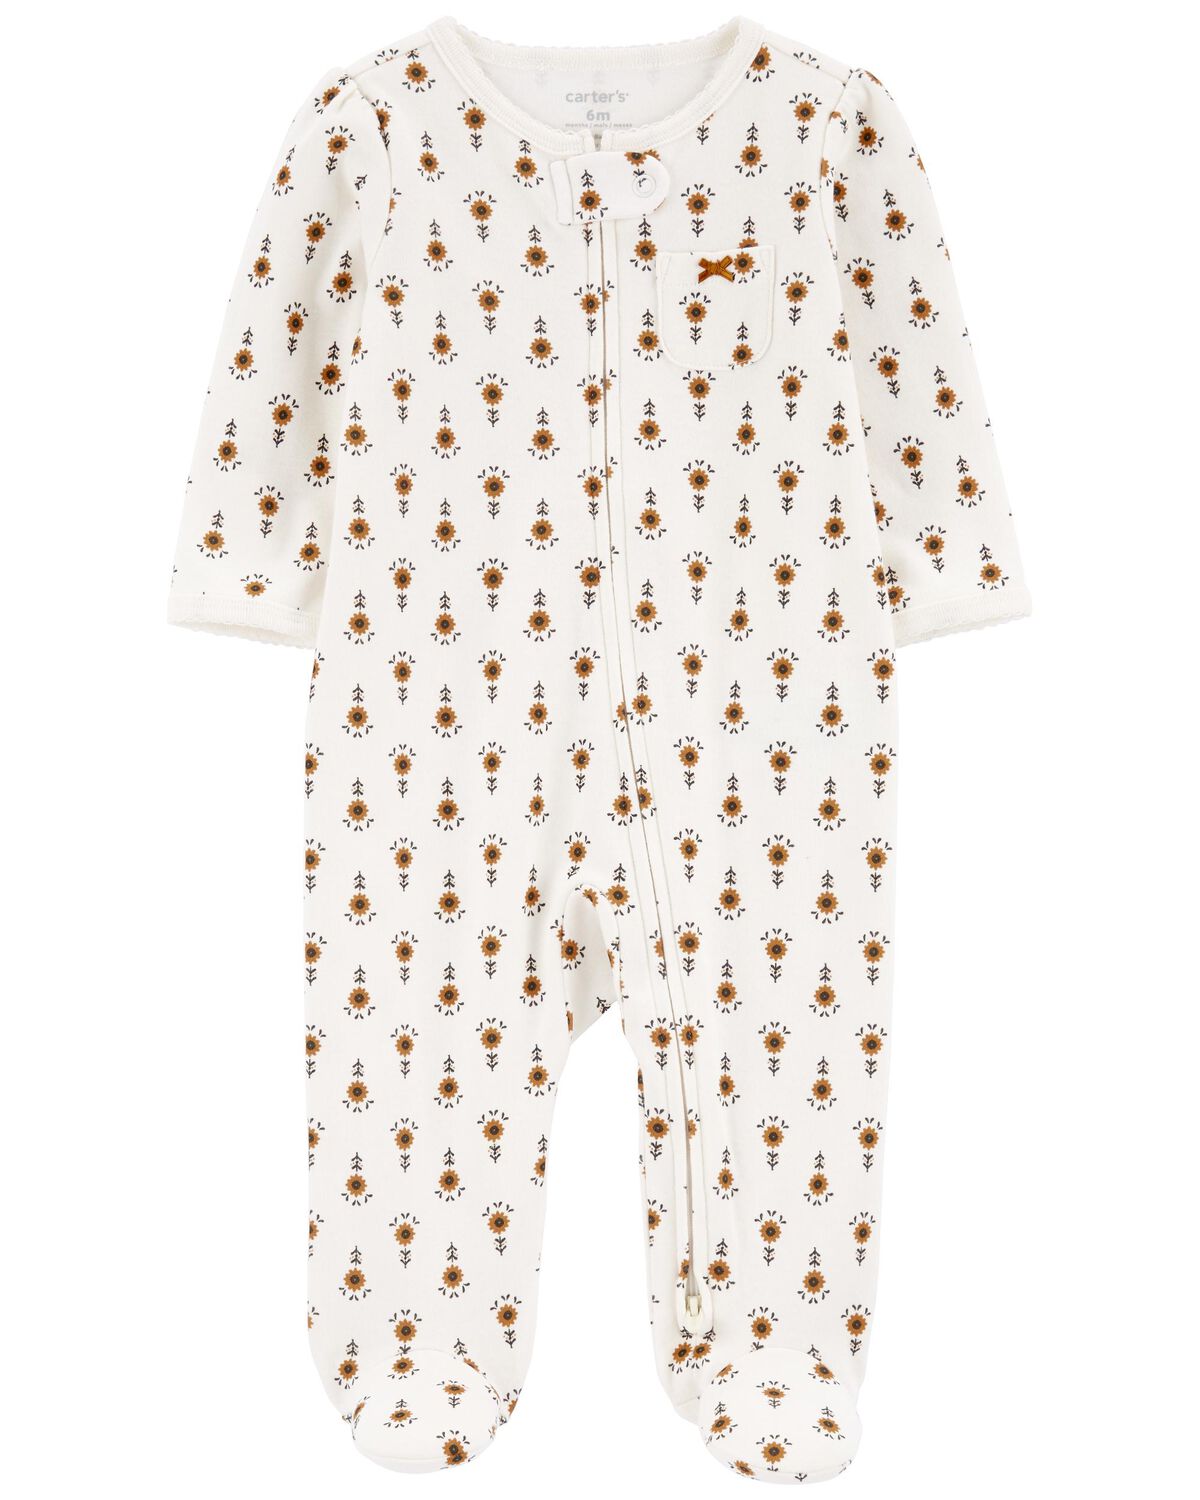 Baby Floral 2-Way Zip Cotton Sleep & Play Pajamas